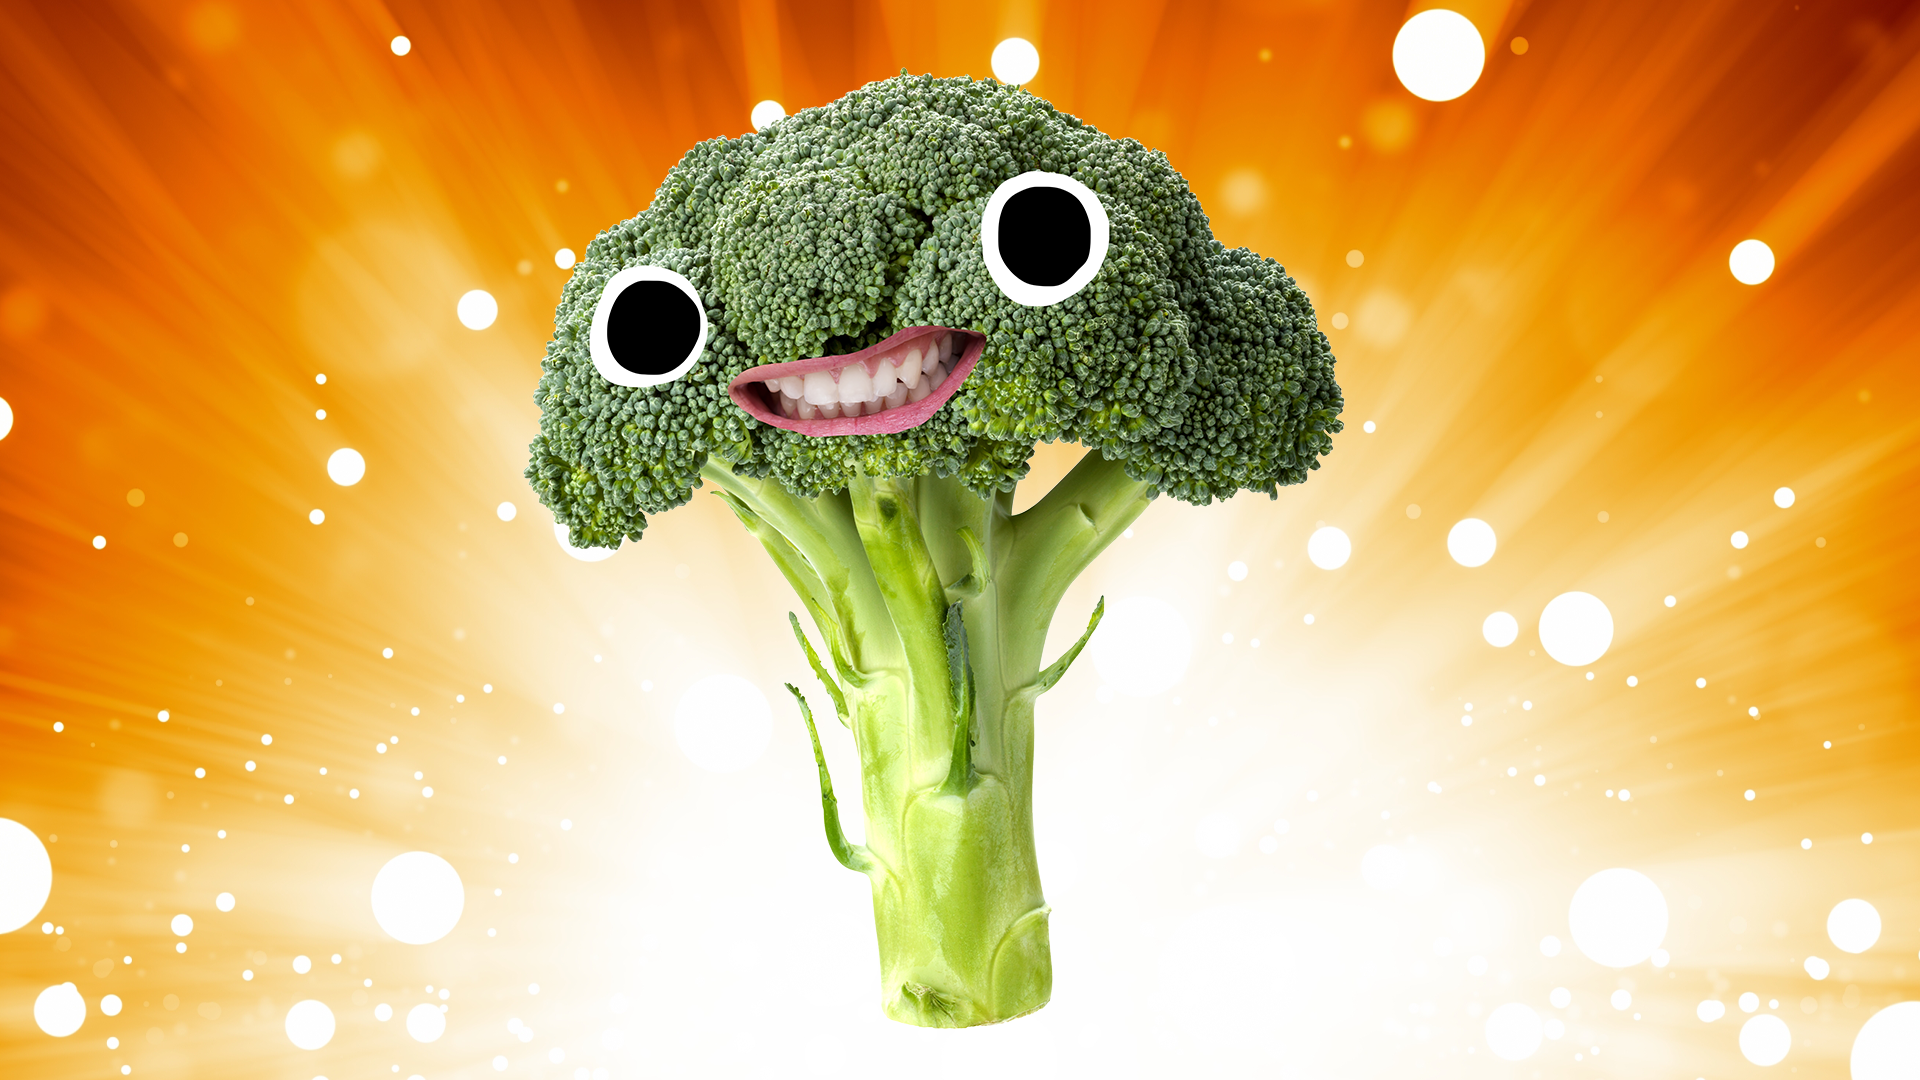 Broccoli on shiny background